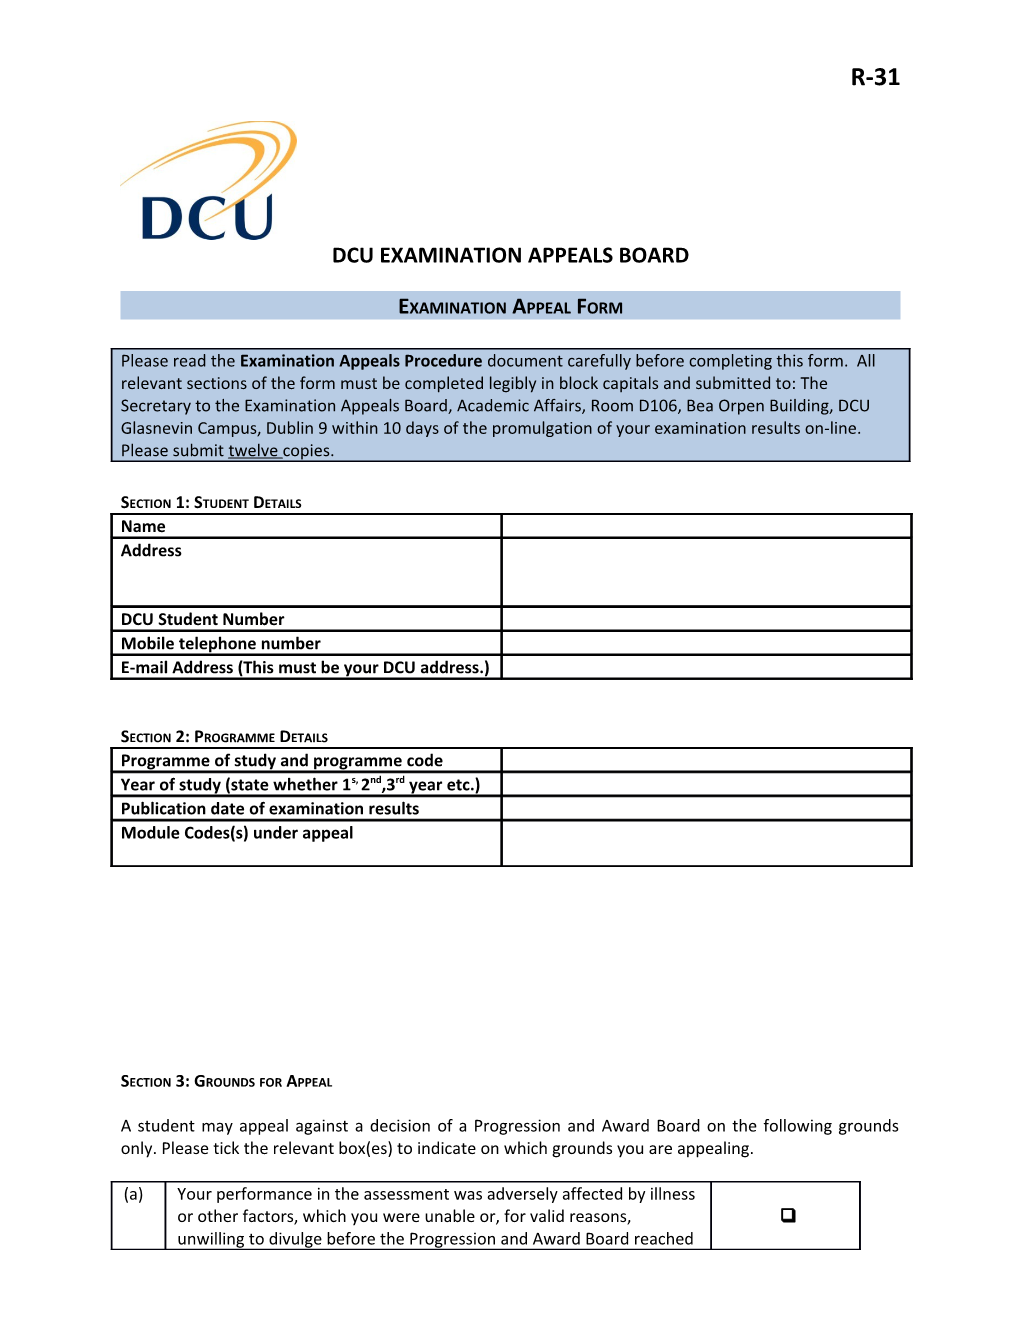 DCU Examination Appeals Board